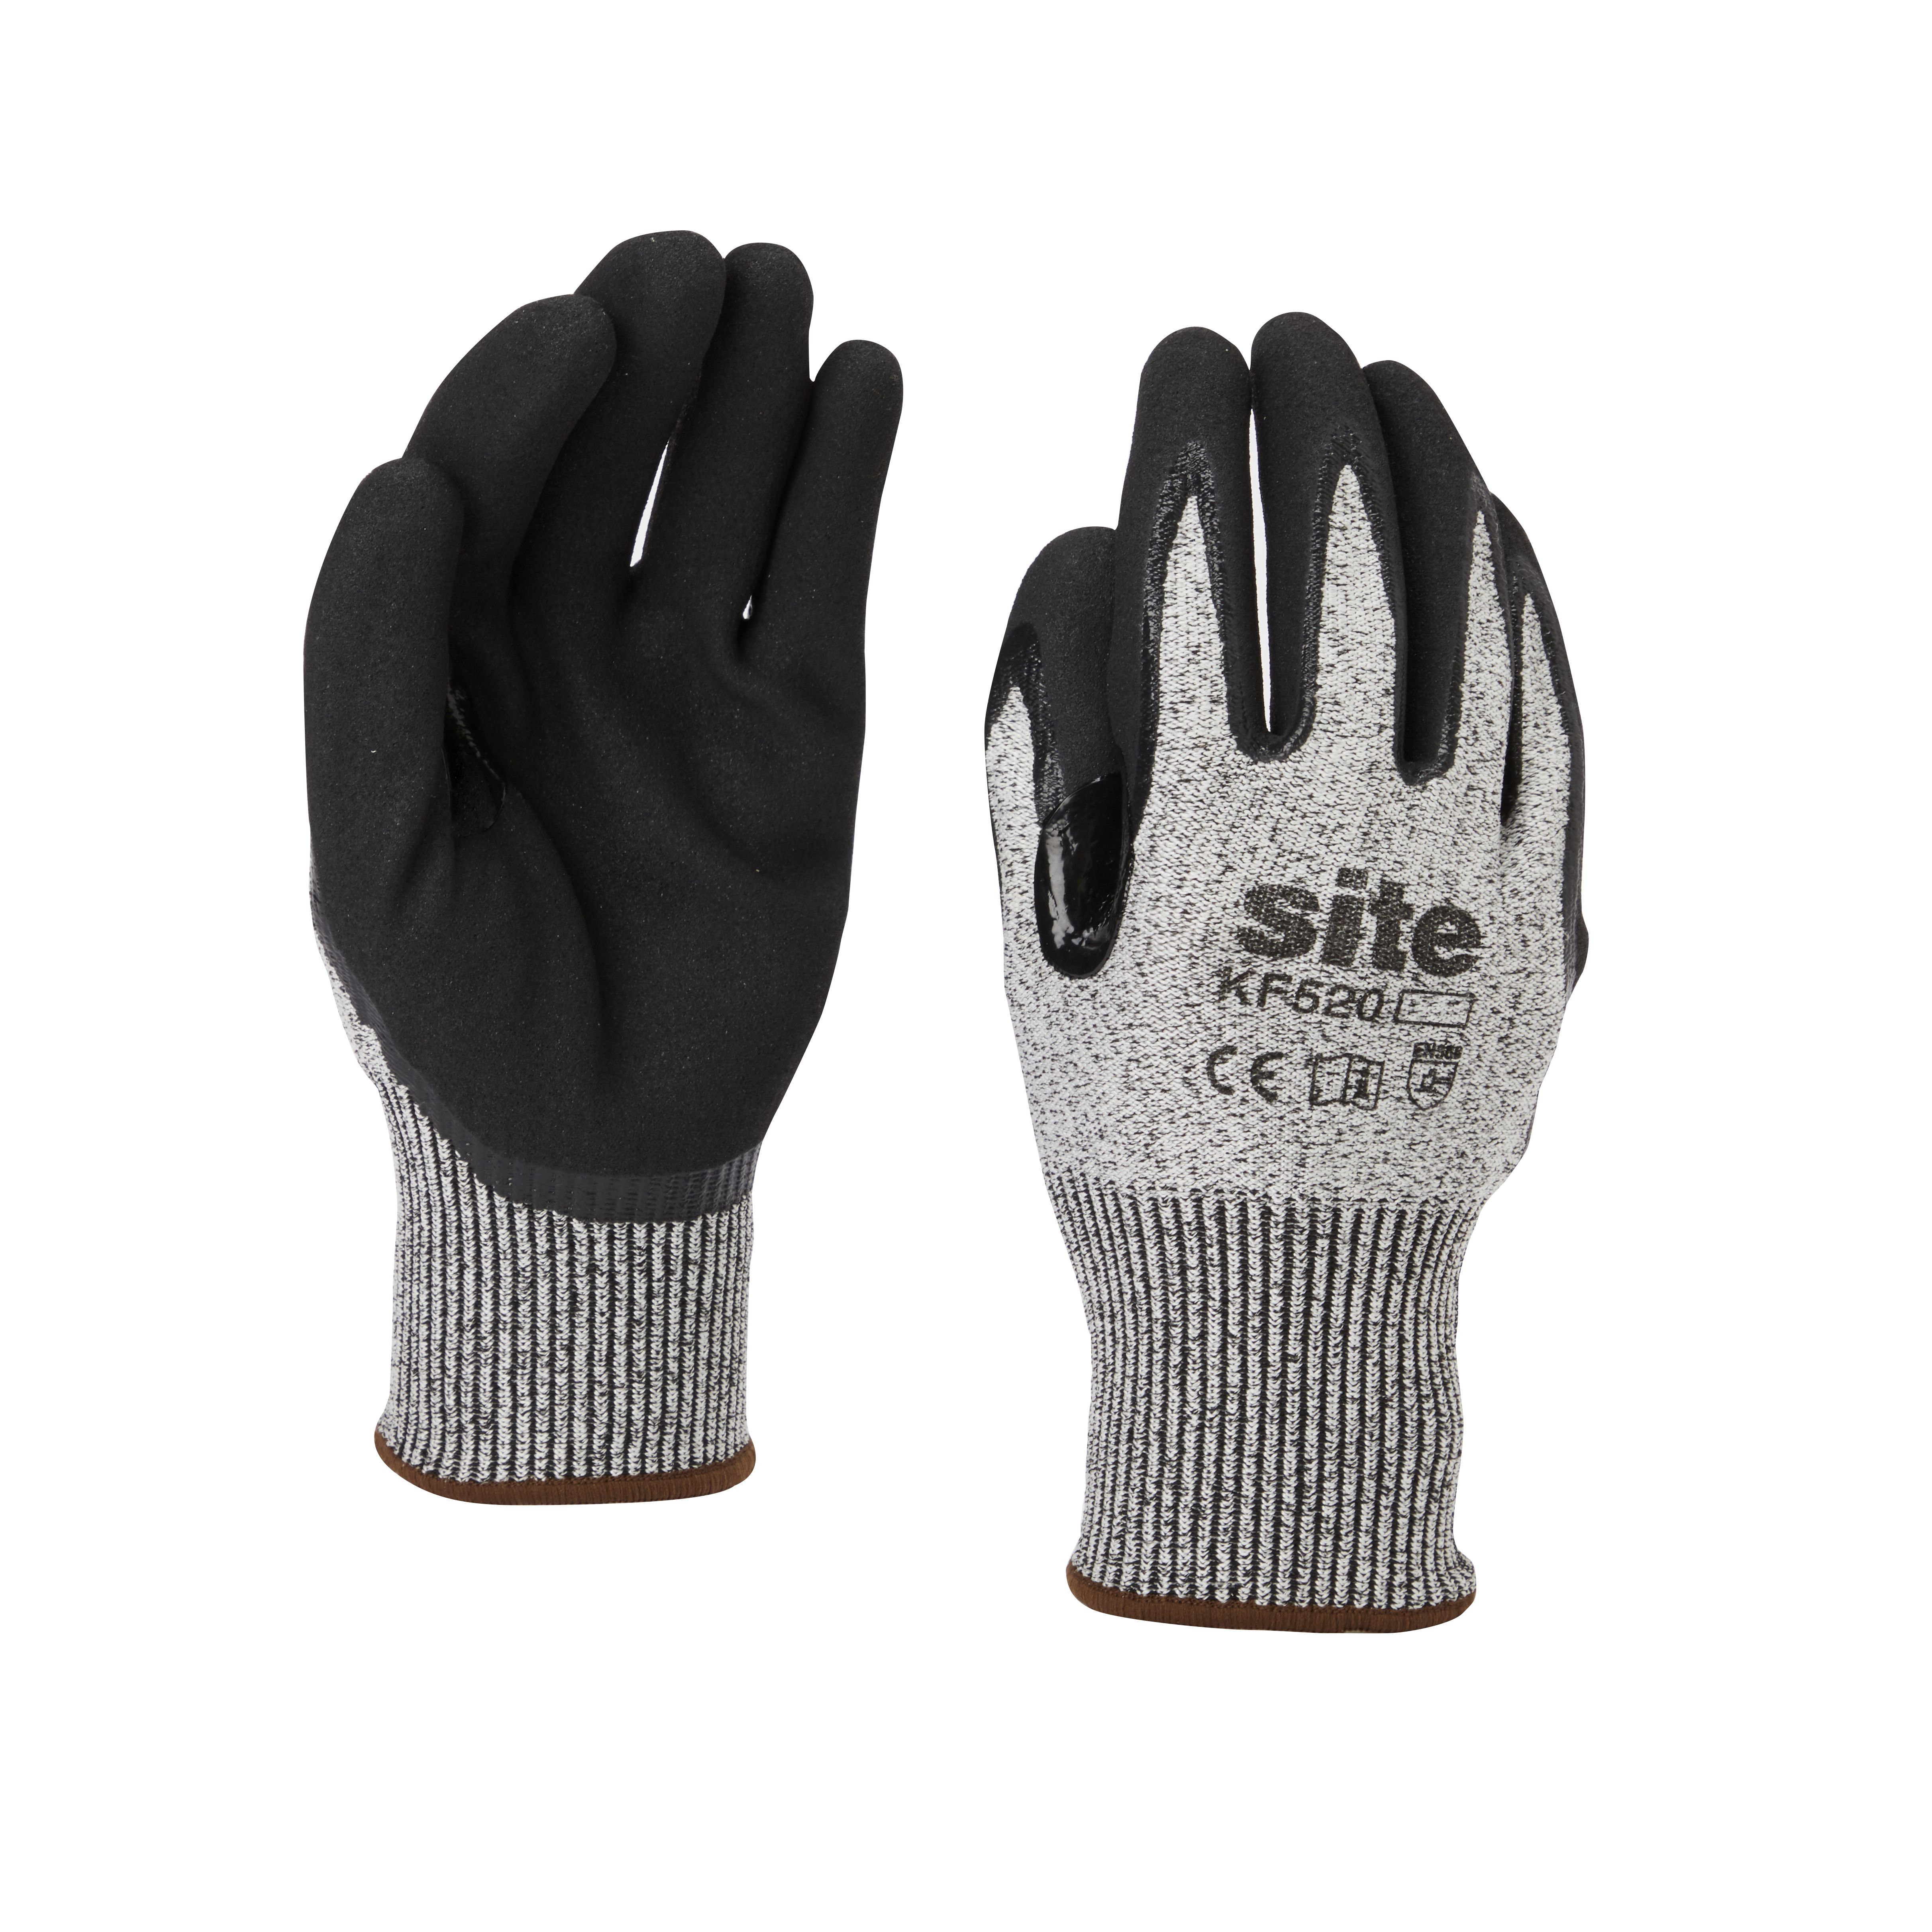 https://media.diy.com/is/image/Kingfisher/site-cut-resistant-gloves-large~3663602671701_02c_bq?$MOB_PREV$&$width=618&$height=618